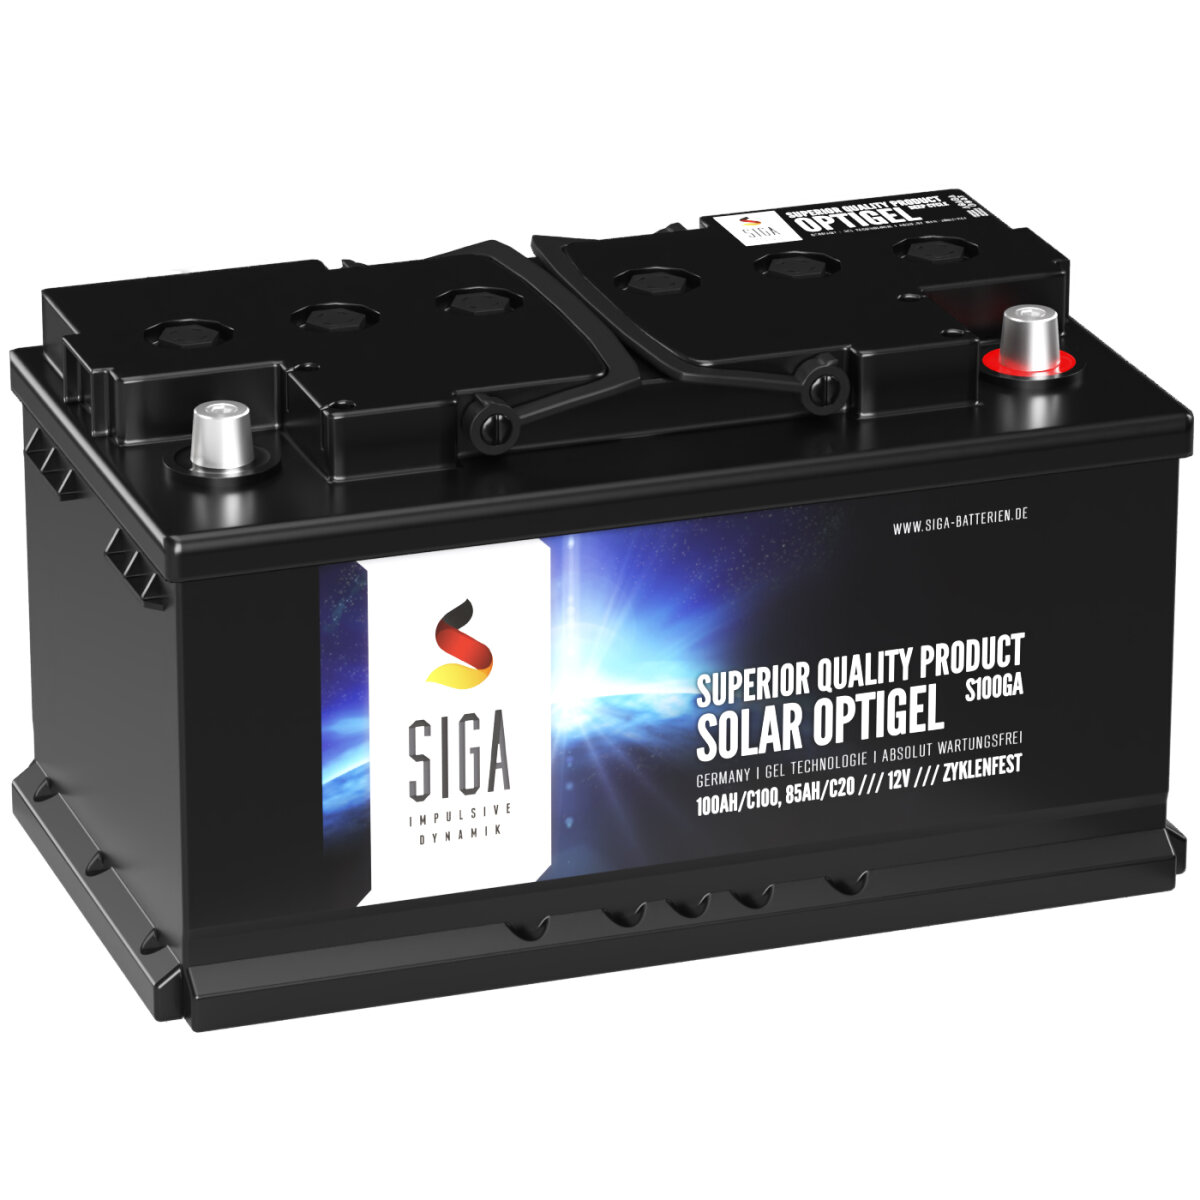 SIGA Solar OPTIGEL Batterie 100Ah 12V, 262,30 €